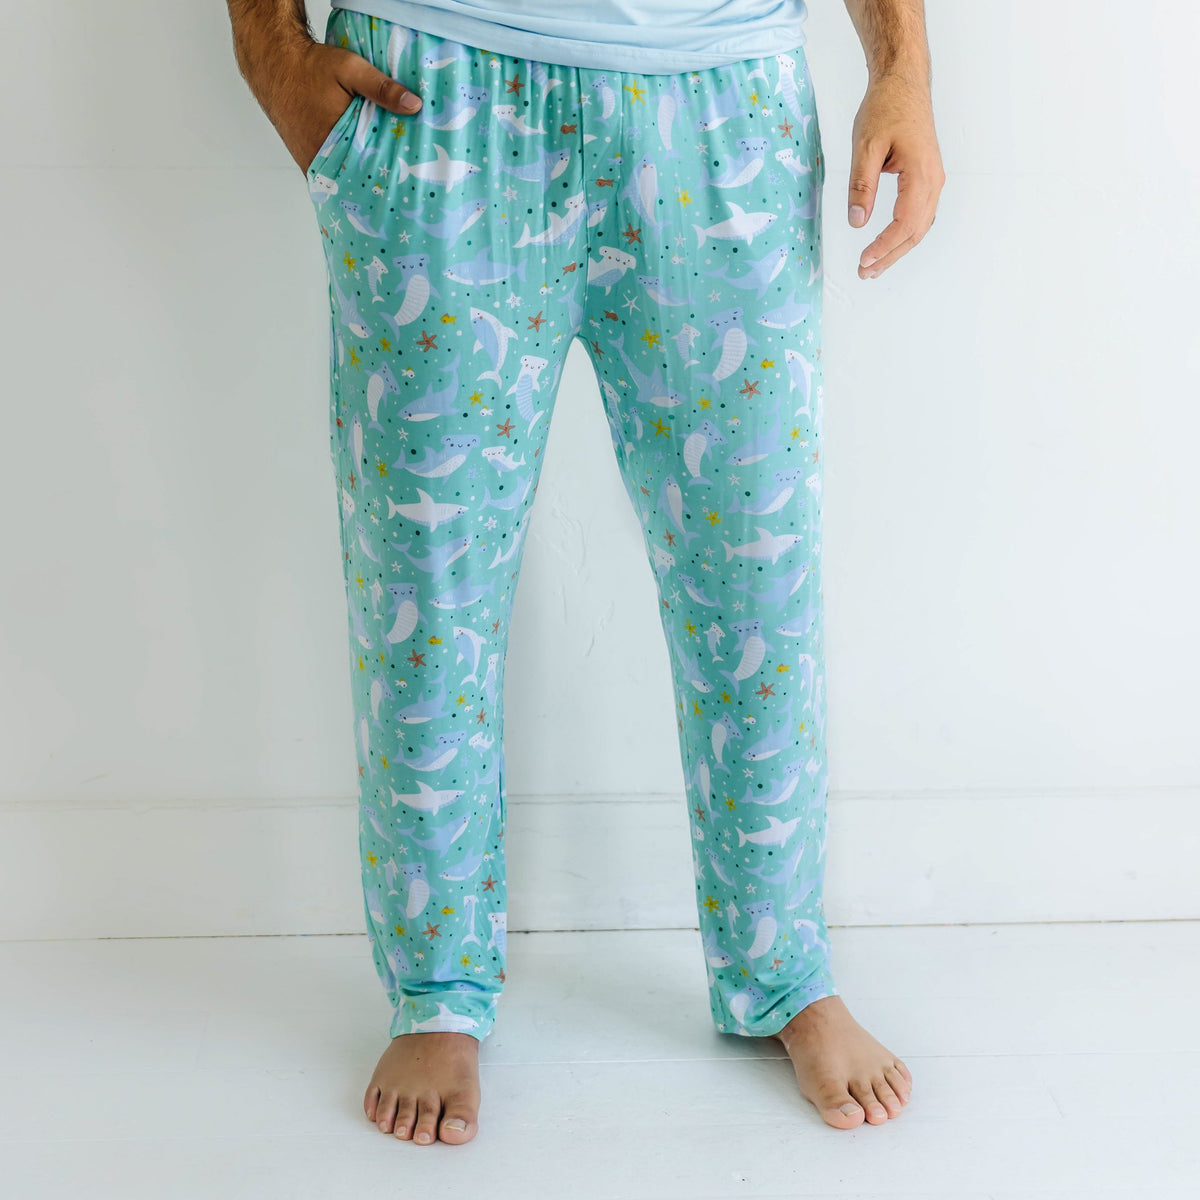 Men's Winter Cozy Fleece Pajama Pant Bottoms with Funny Shark Print